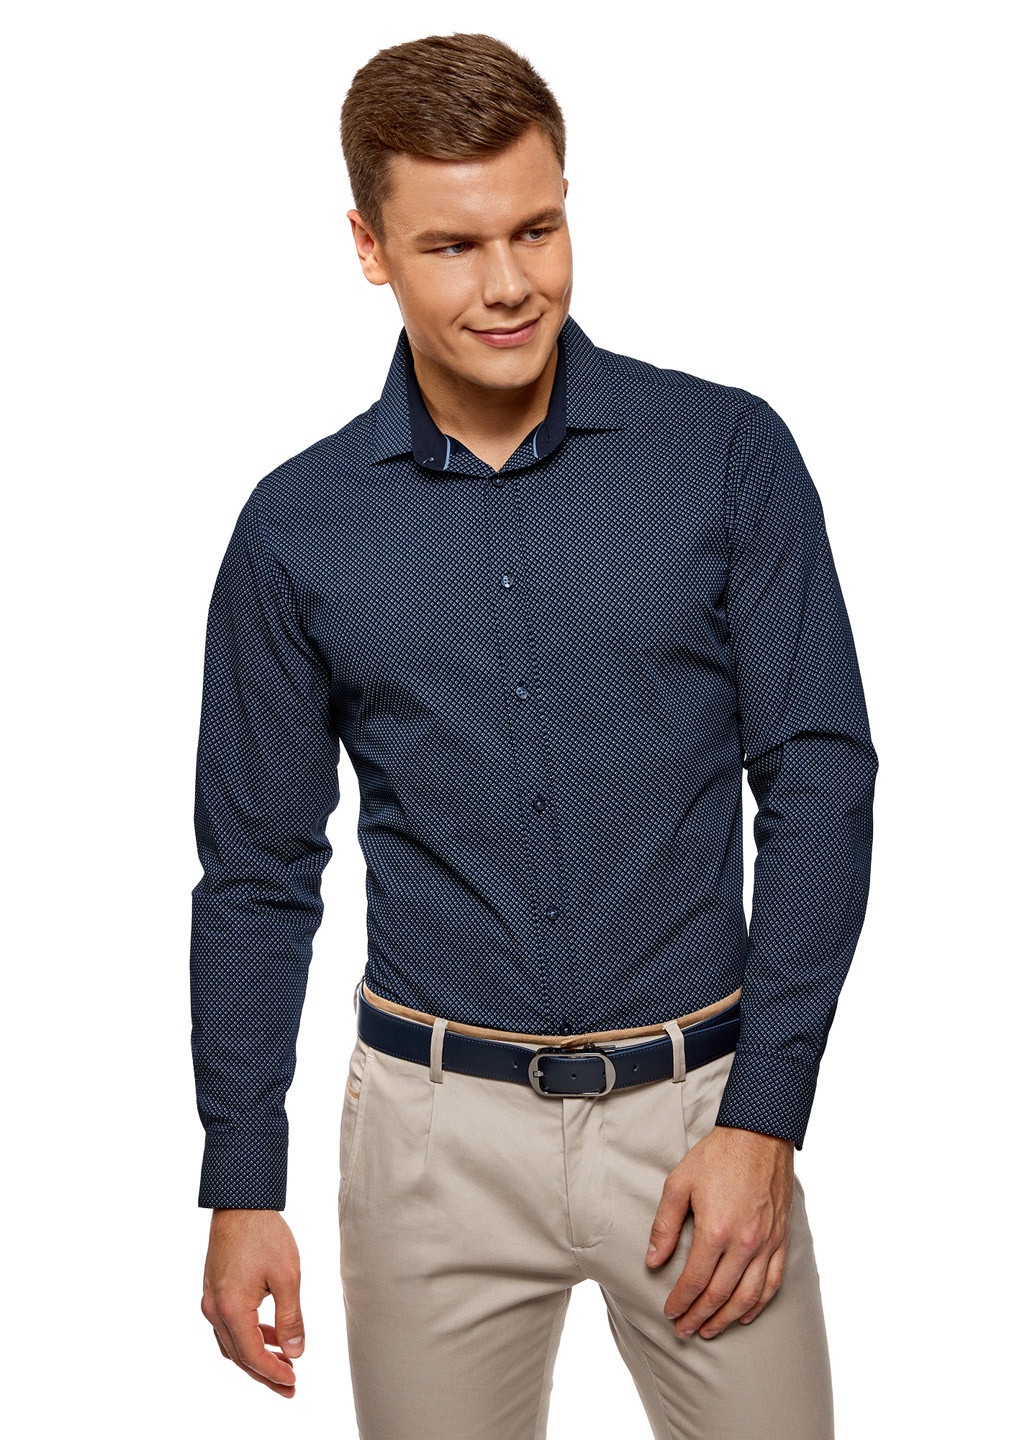 Темно-синяя кэжуал рубашка с геометрическим узором Oodji с длинным рукавом